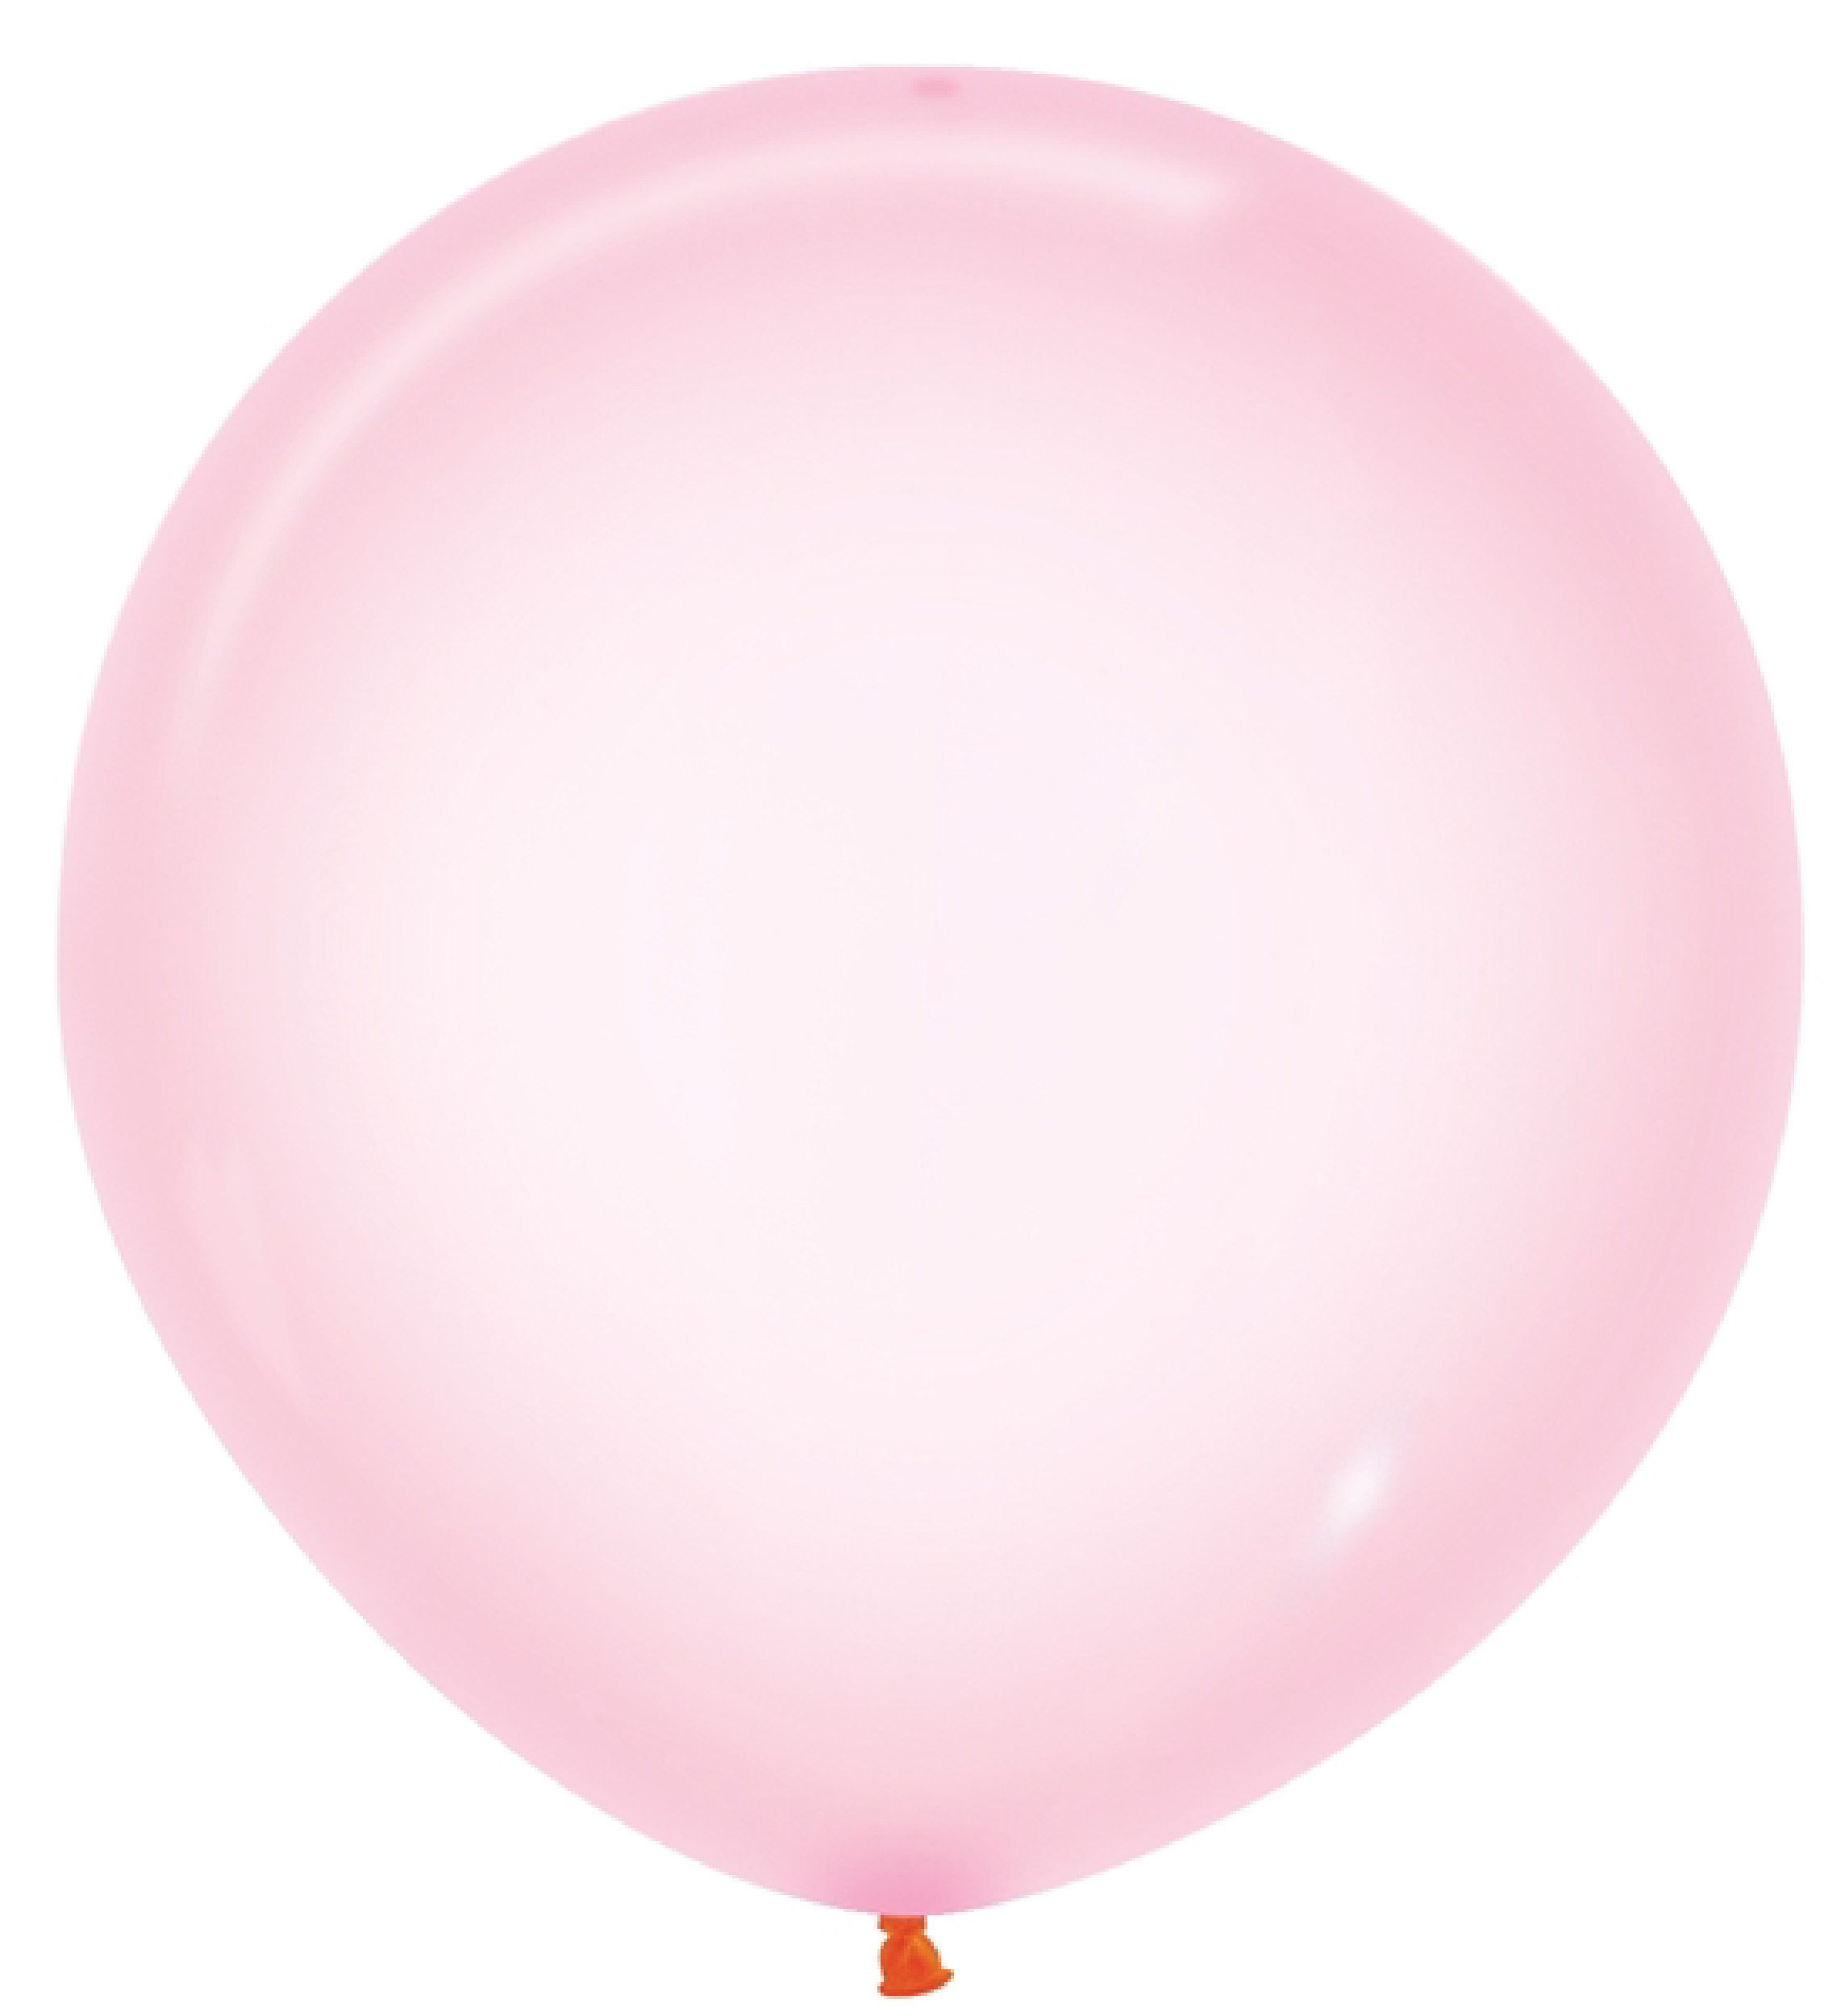 Latex Balloons Ø 23 cm Pastel 10 Pieces Pink dekoballons Balloons 